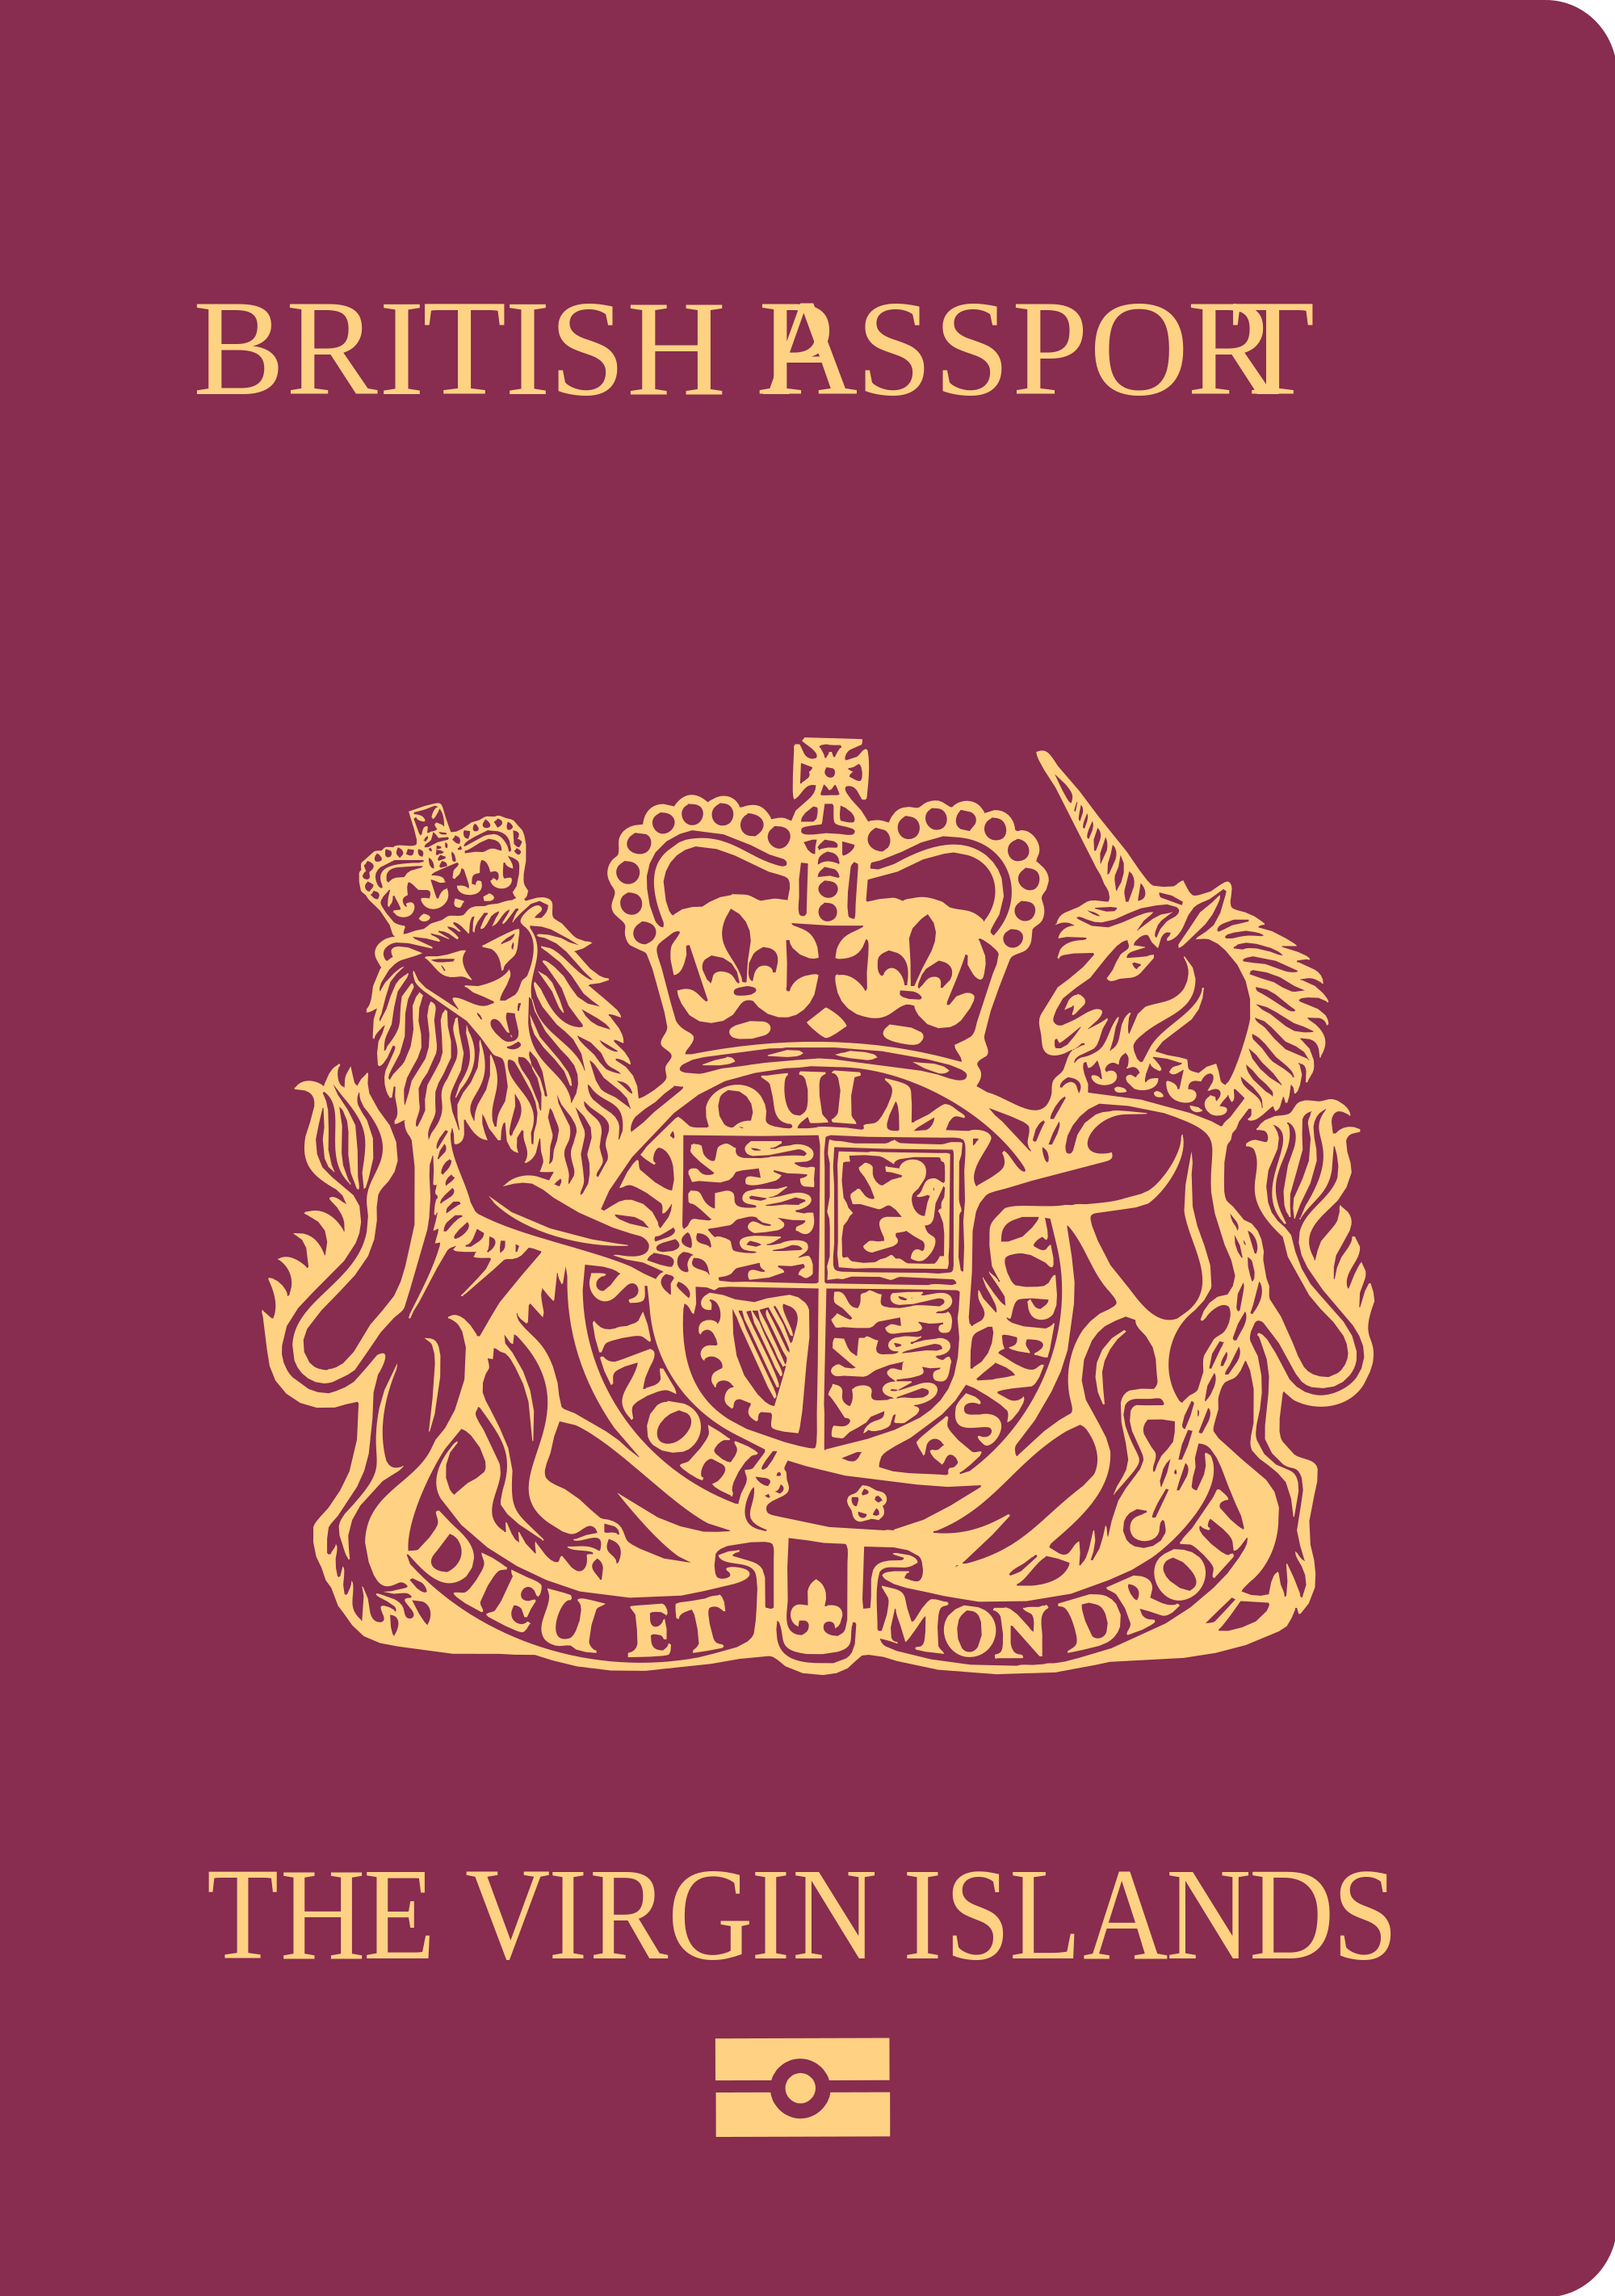 Vietnam visa requirement for Virgin British